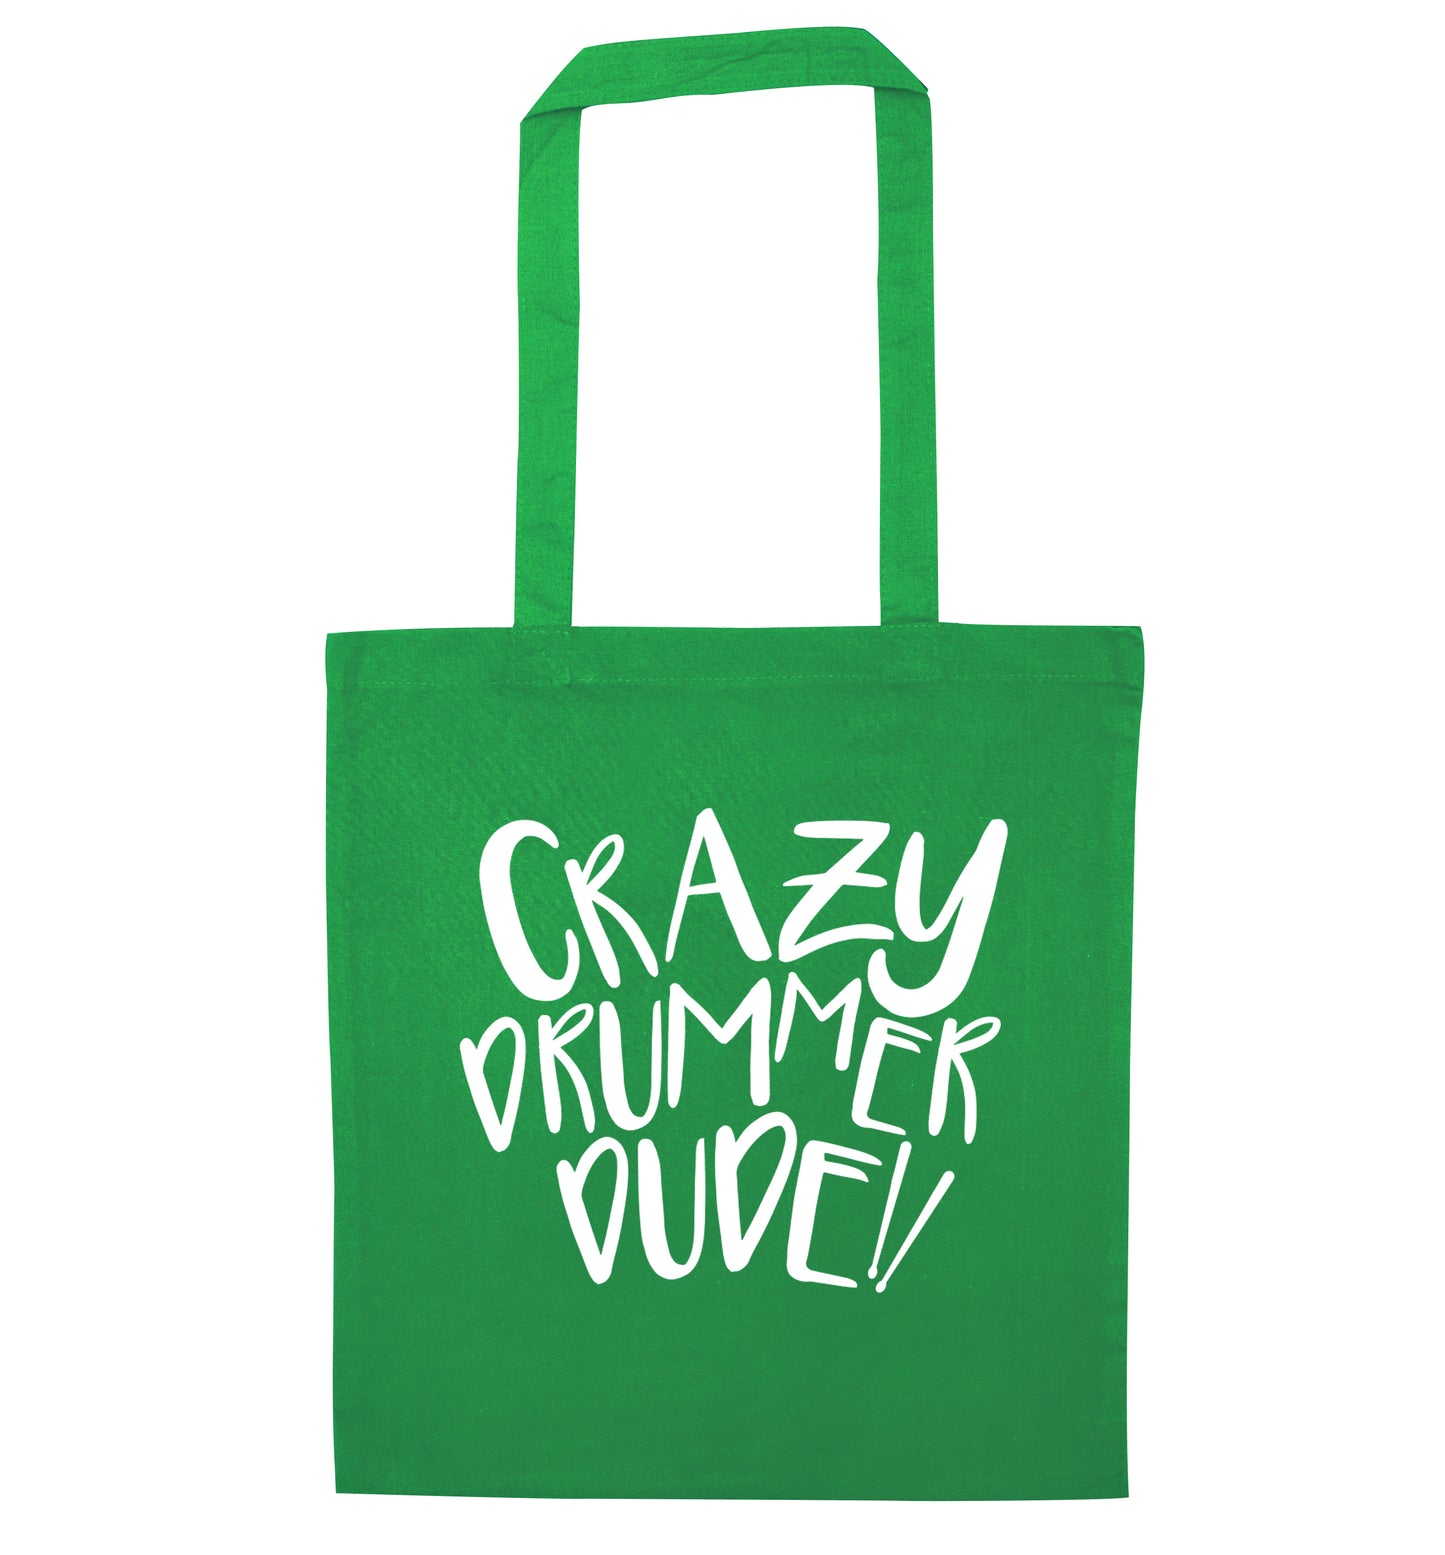 Crazy drummer dude green tote bag